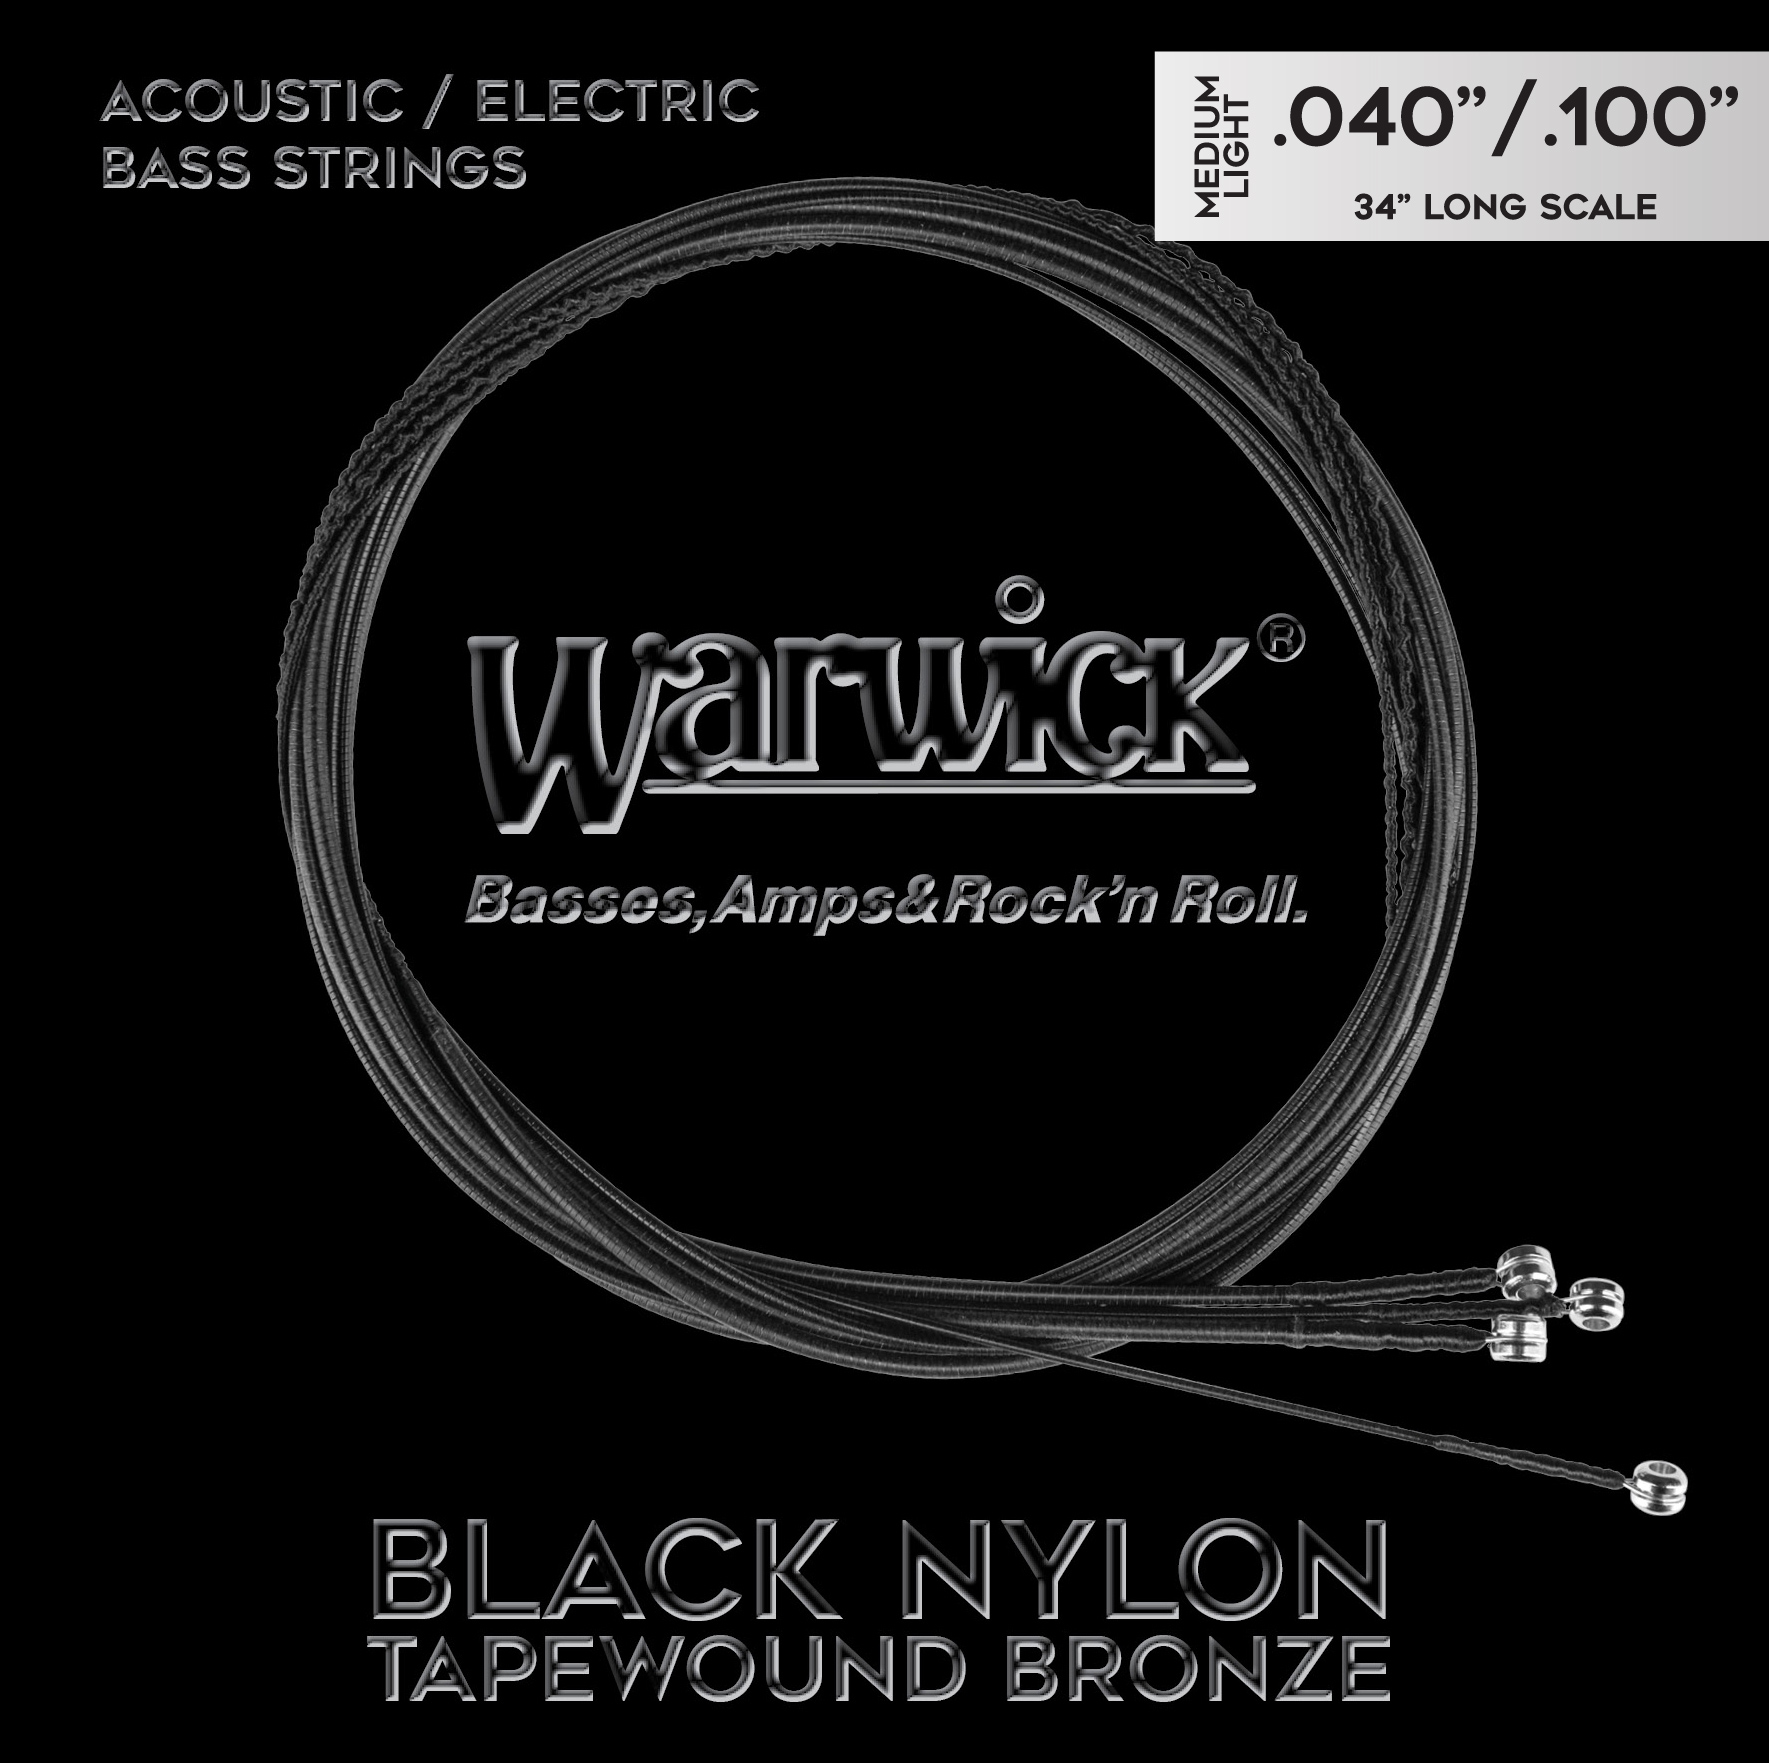 Warwick Black Nylon Tapewound Acoustic / Electric Bass String Set - 4-String, Medium Light, 040"-.100", Long Scale